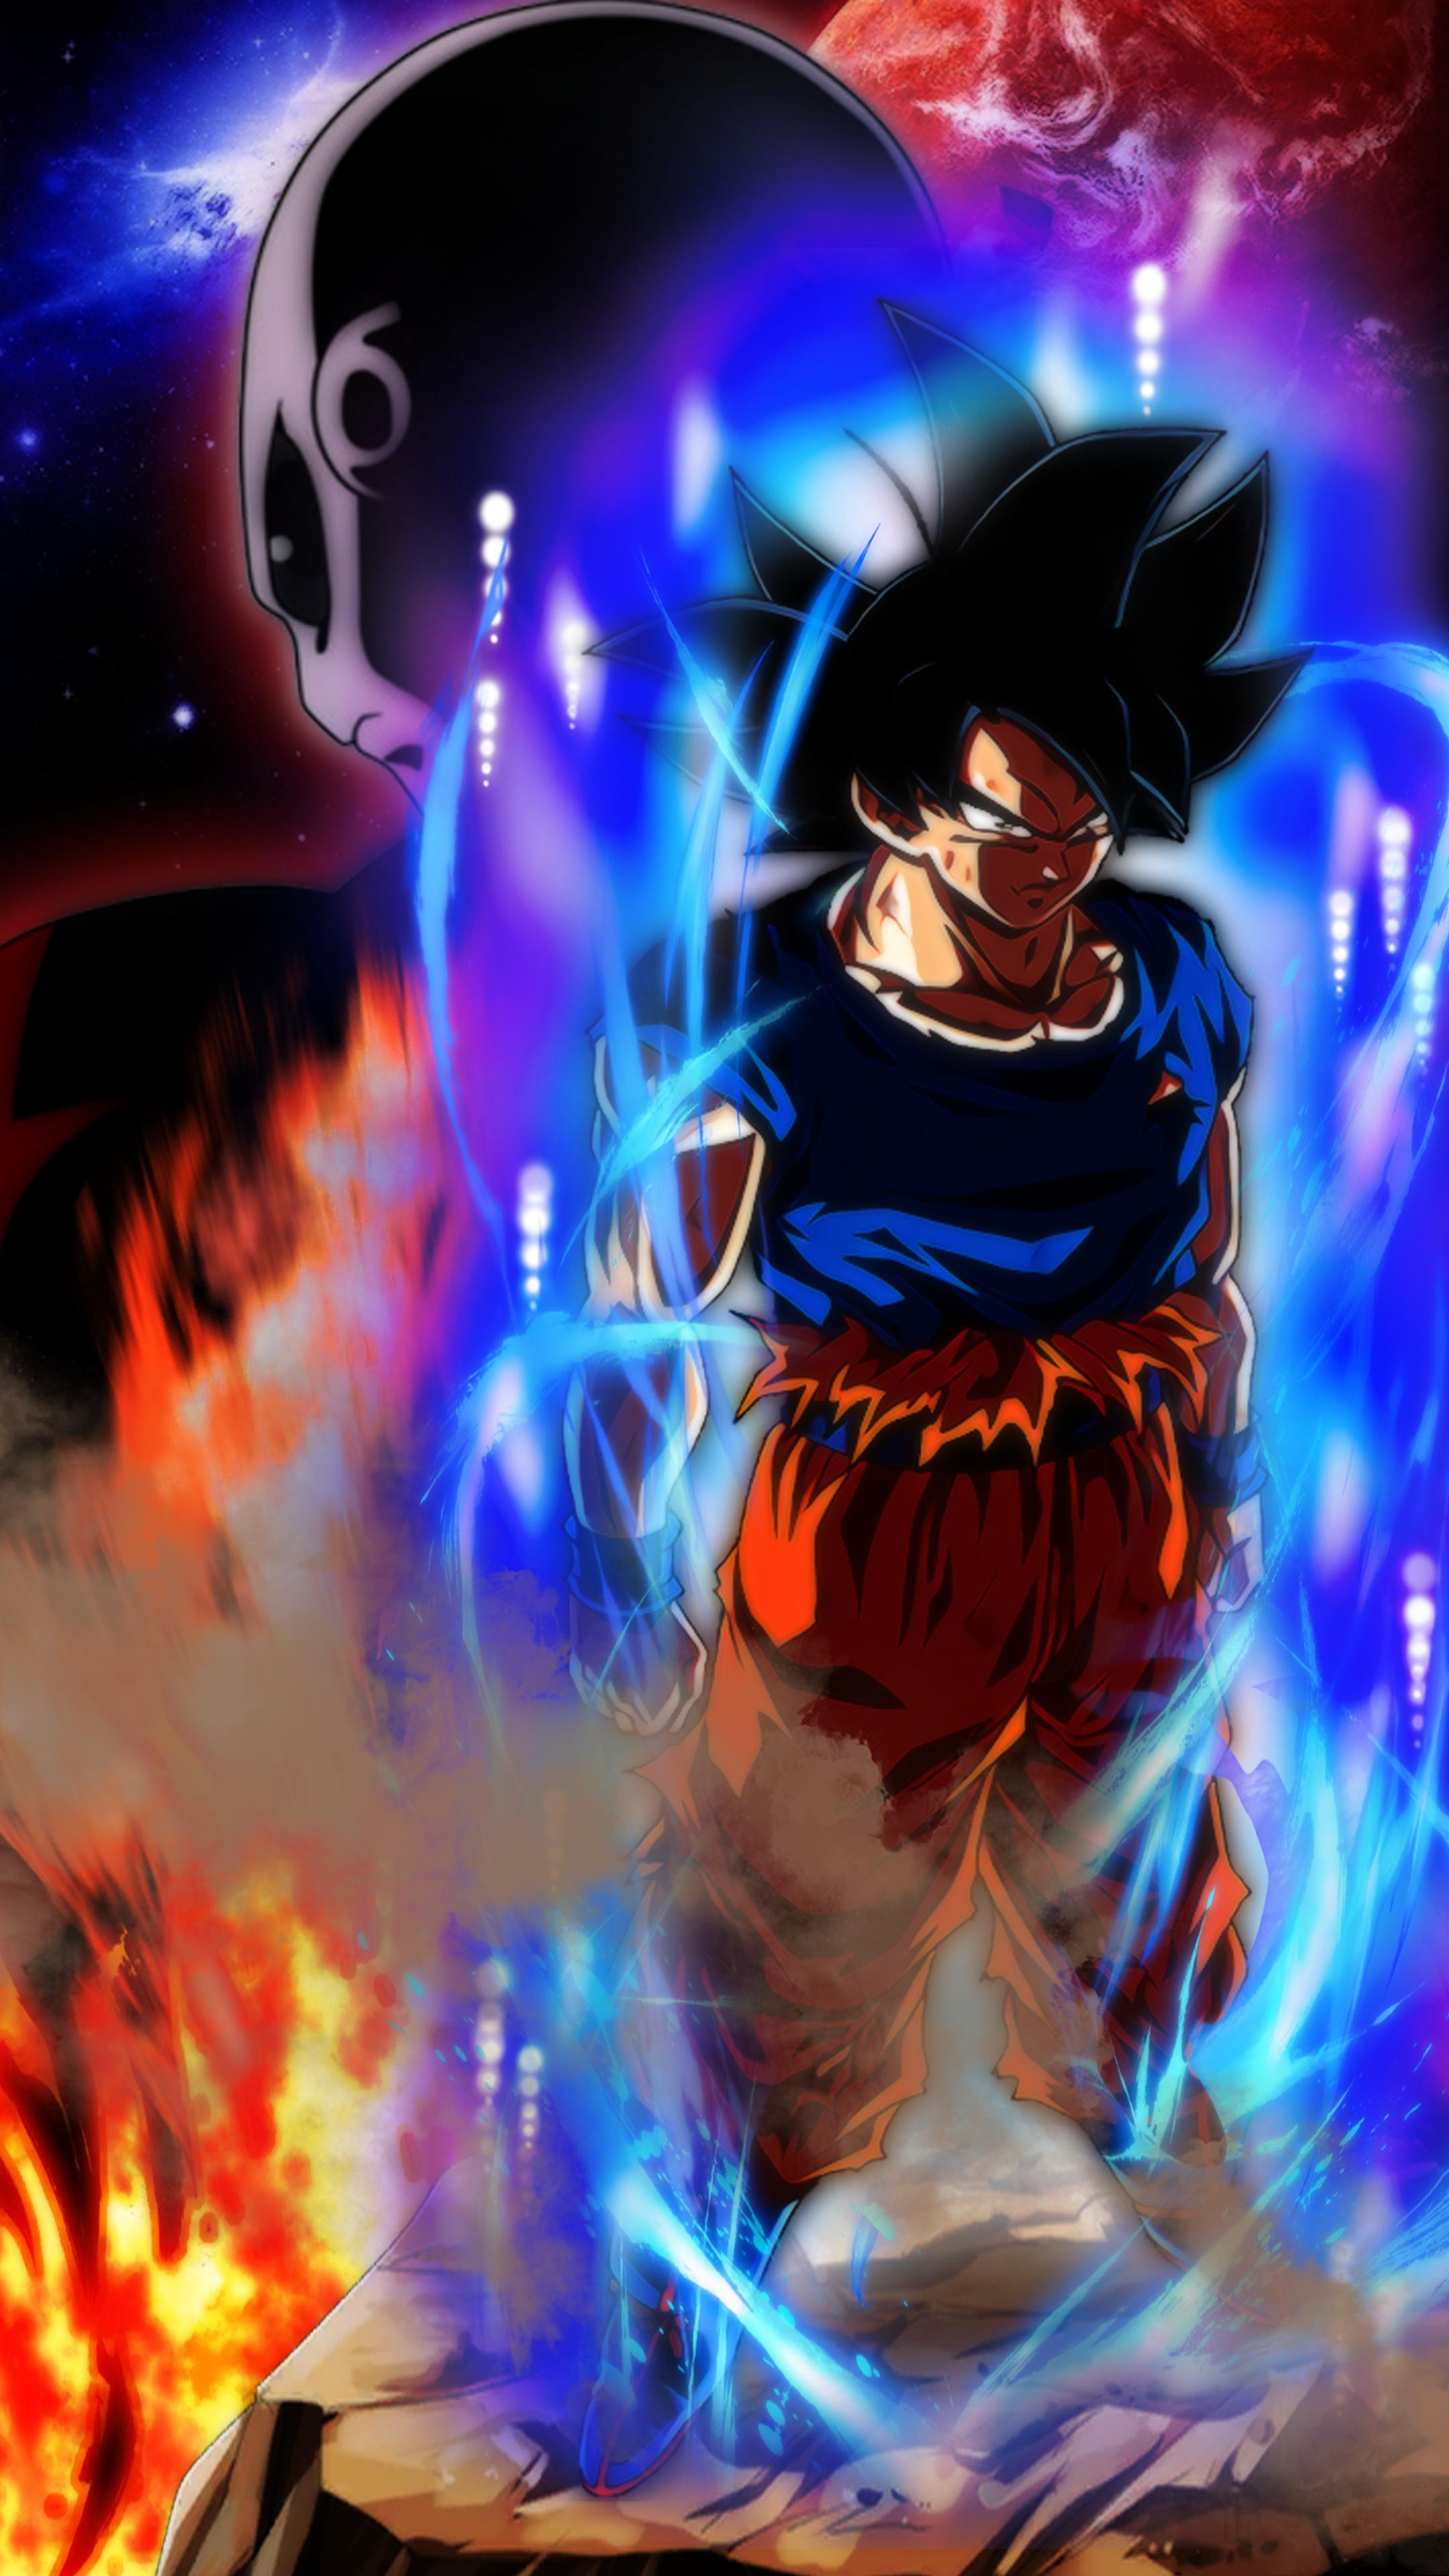 Goku UI Wallpapers - Top Free Goku UI Backgrounds 